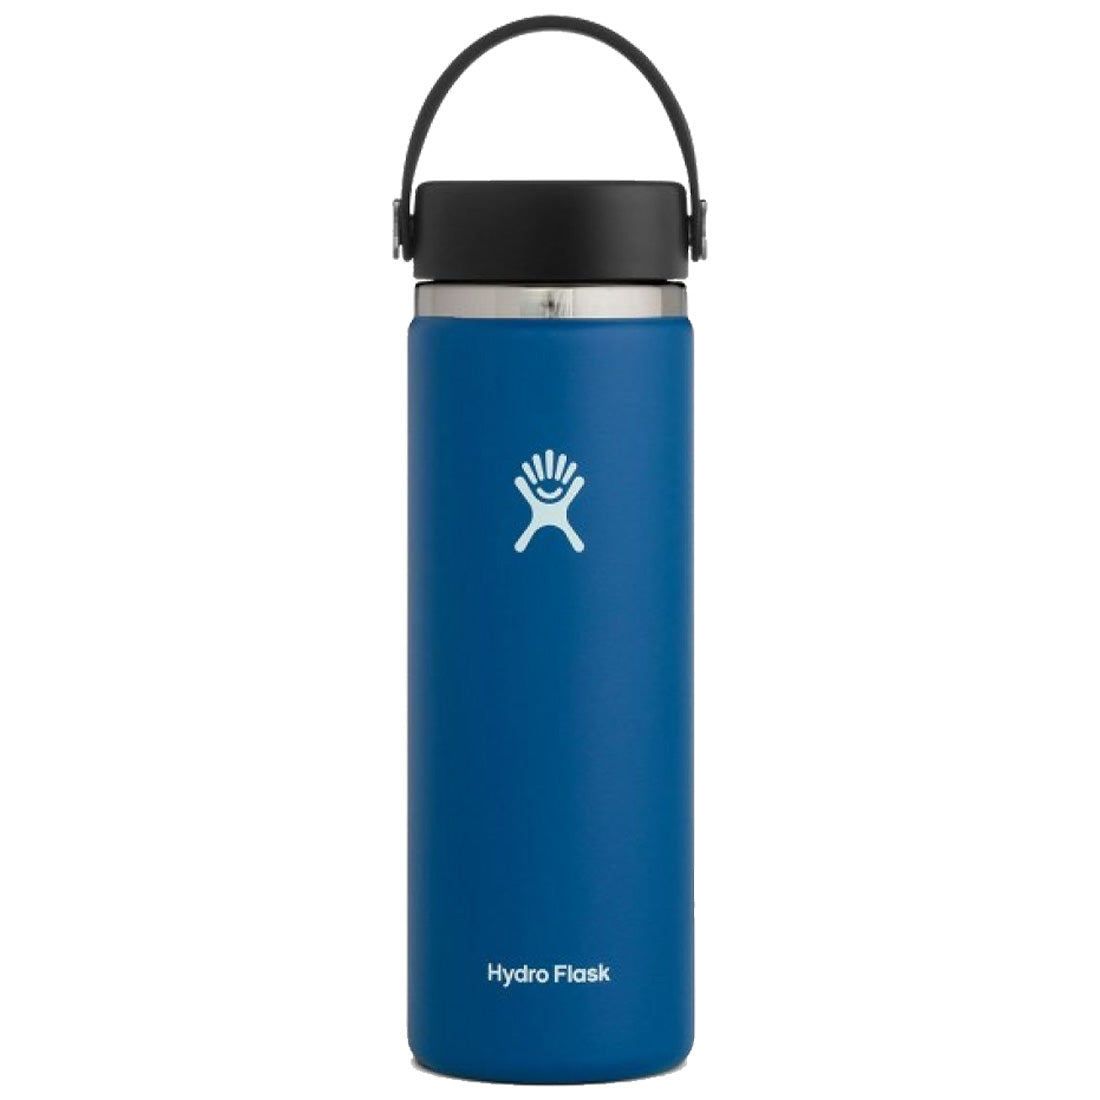 Hydro Flask Lightweight Wide Mouth 32 oz Trail Water Bottle